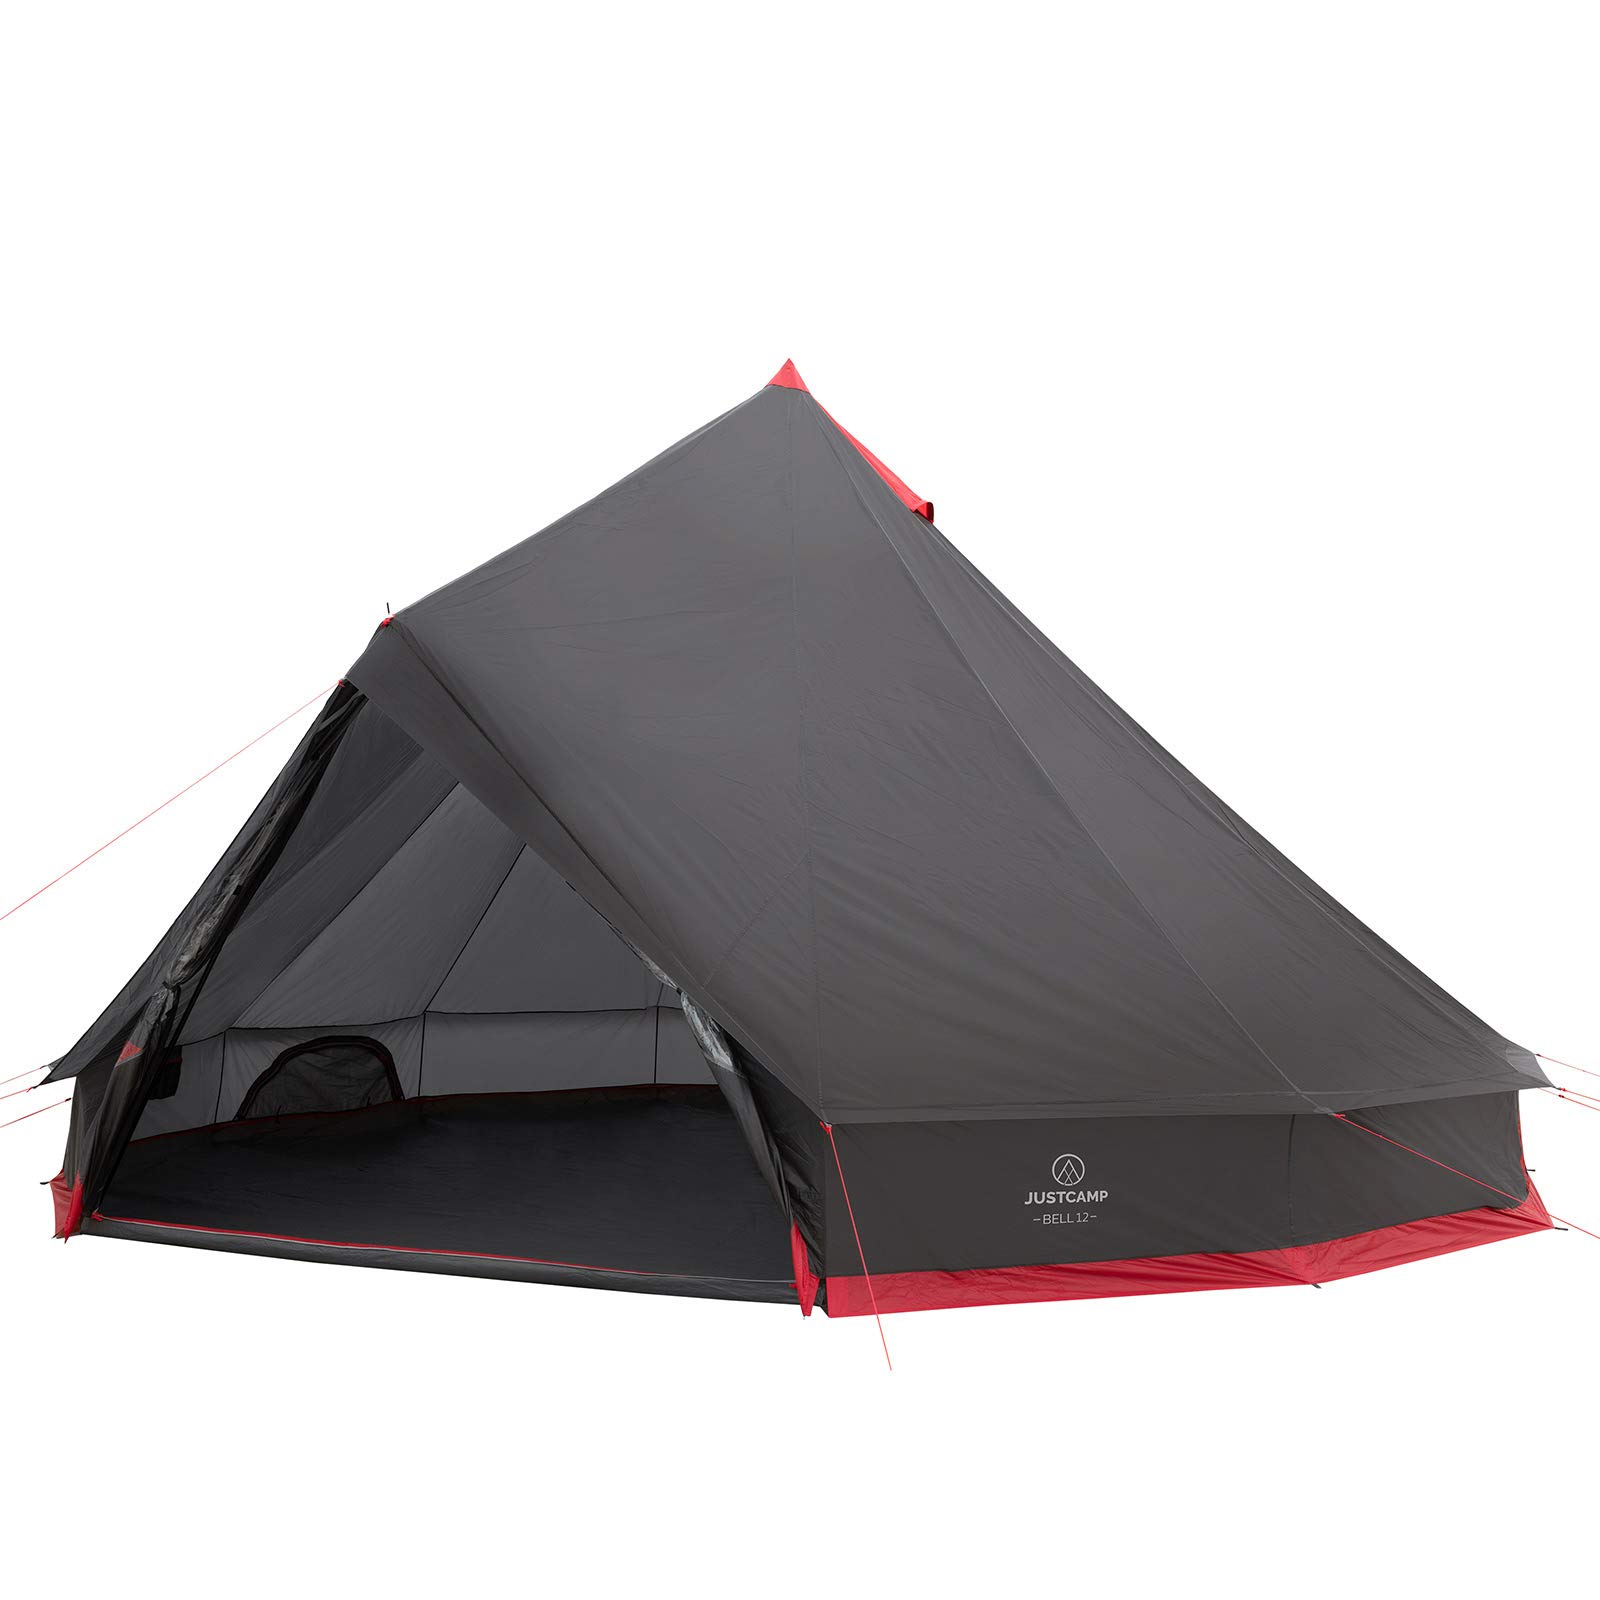 qeedo Bell 12 Tipi Zelt für Gruppen, Familien oder Camping bis zu 12 Personen